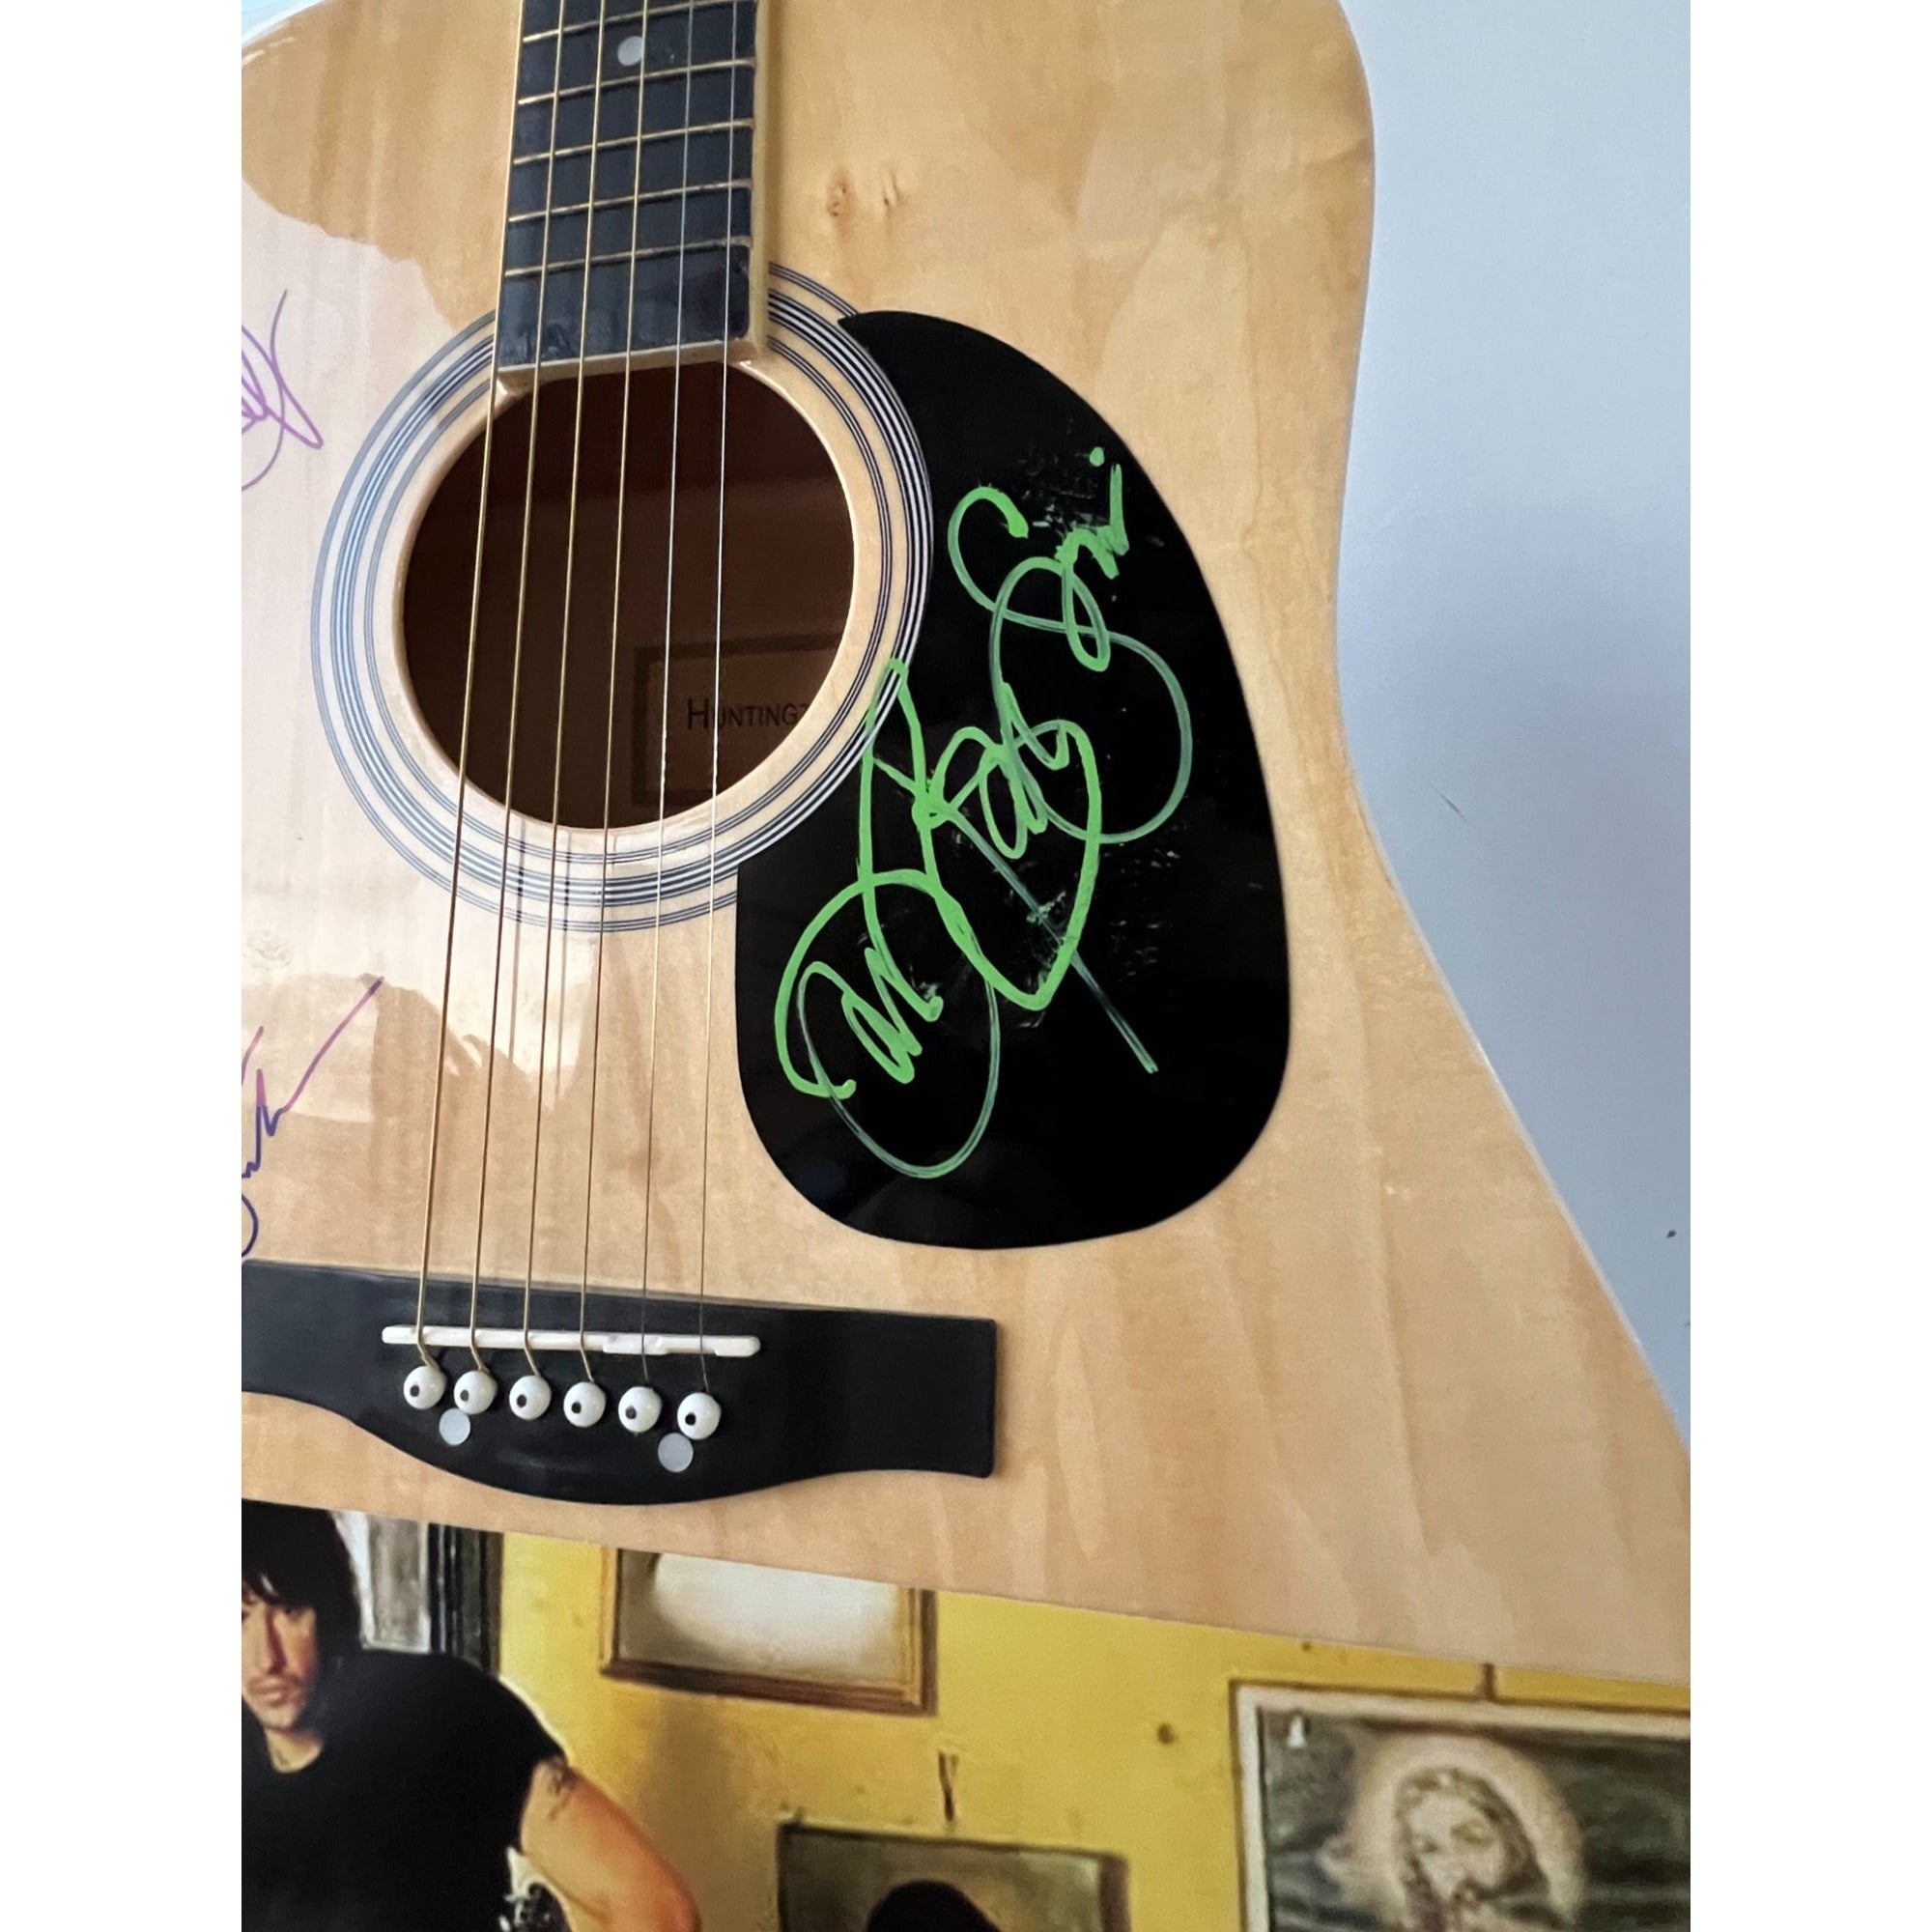 John Bon Jovi Richie Sambora Tico Torres David Bryan Bon Jovi one of a kind 39' acoustic guitar signed with proof